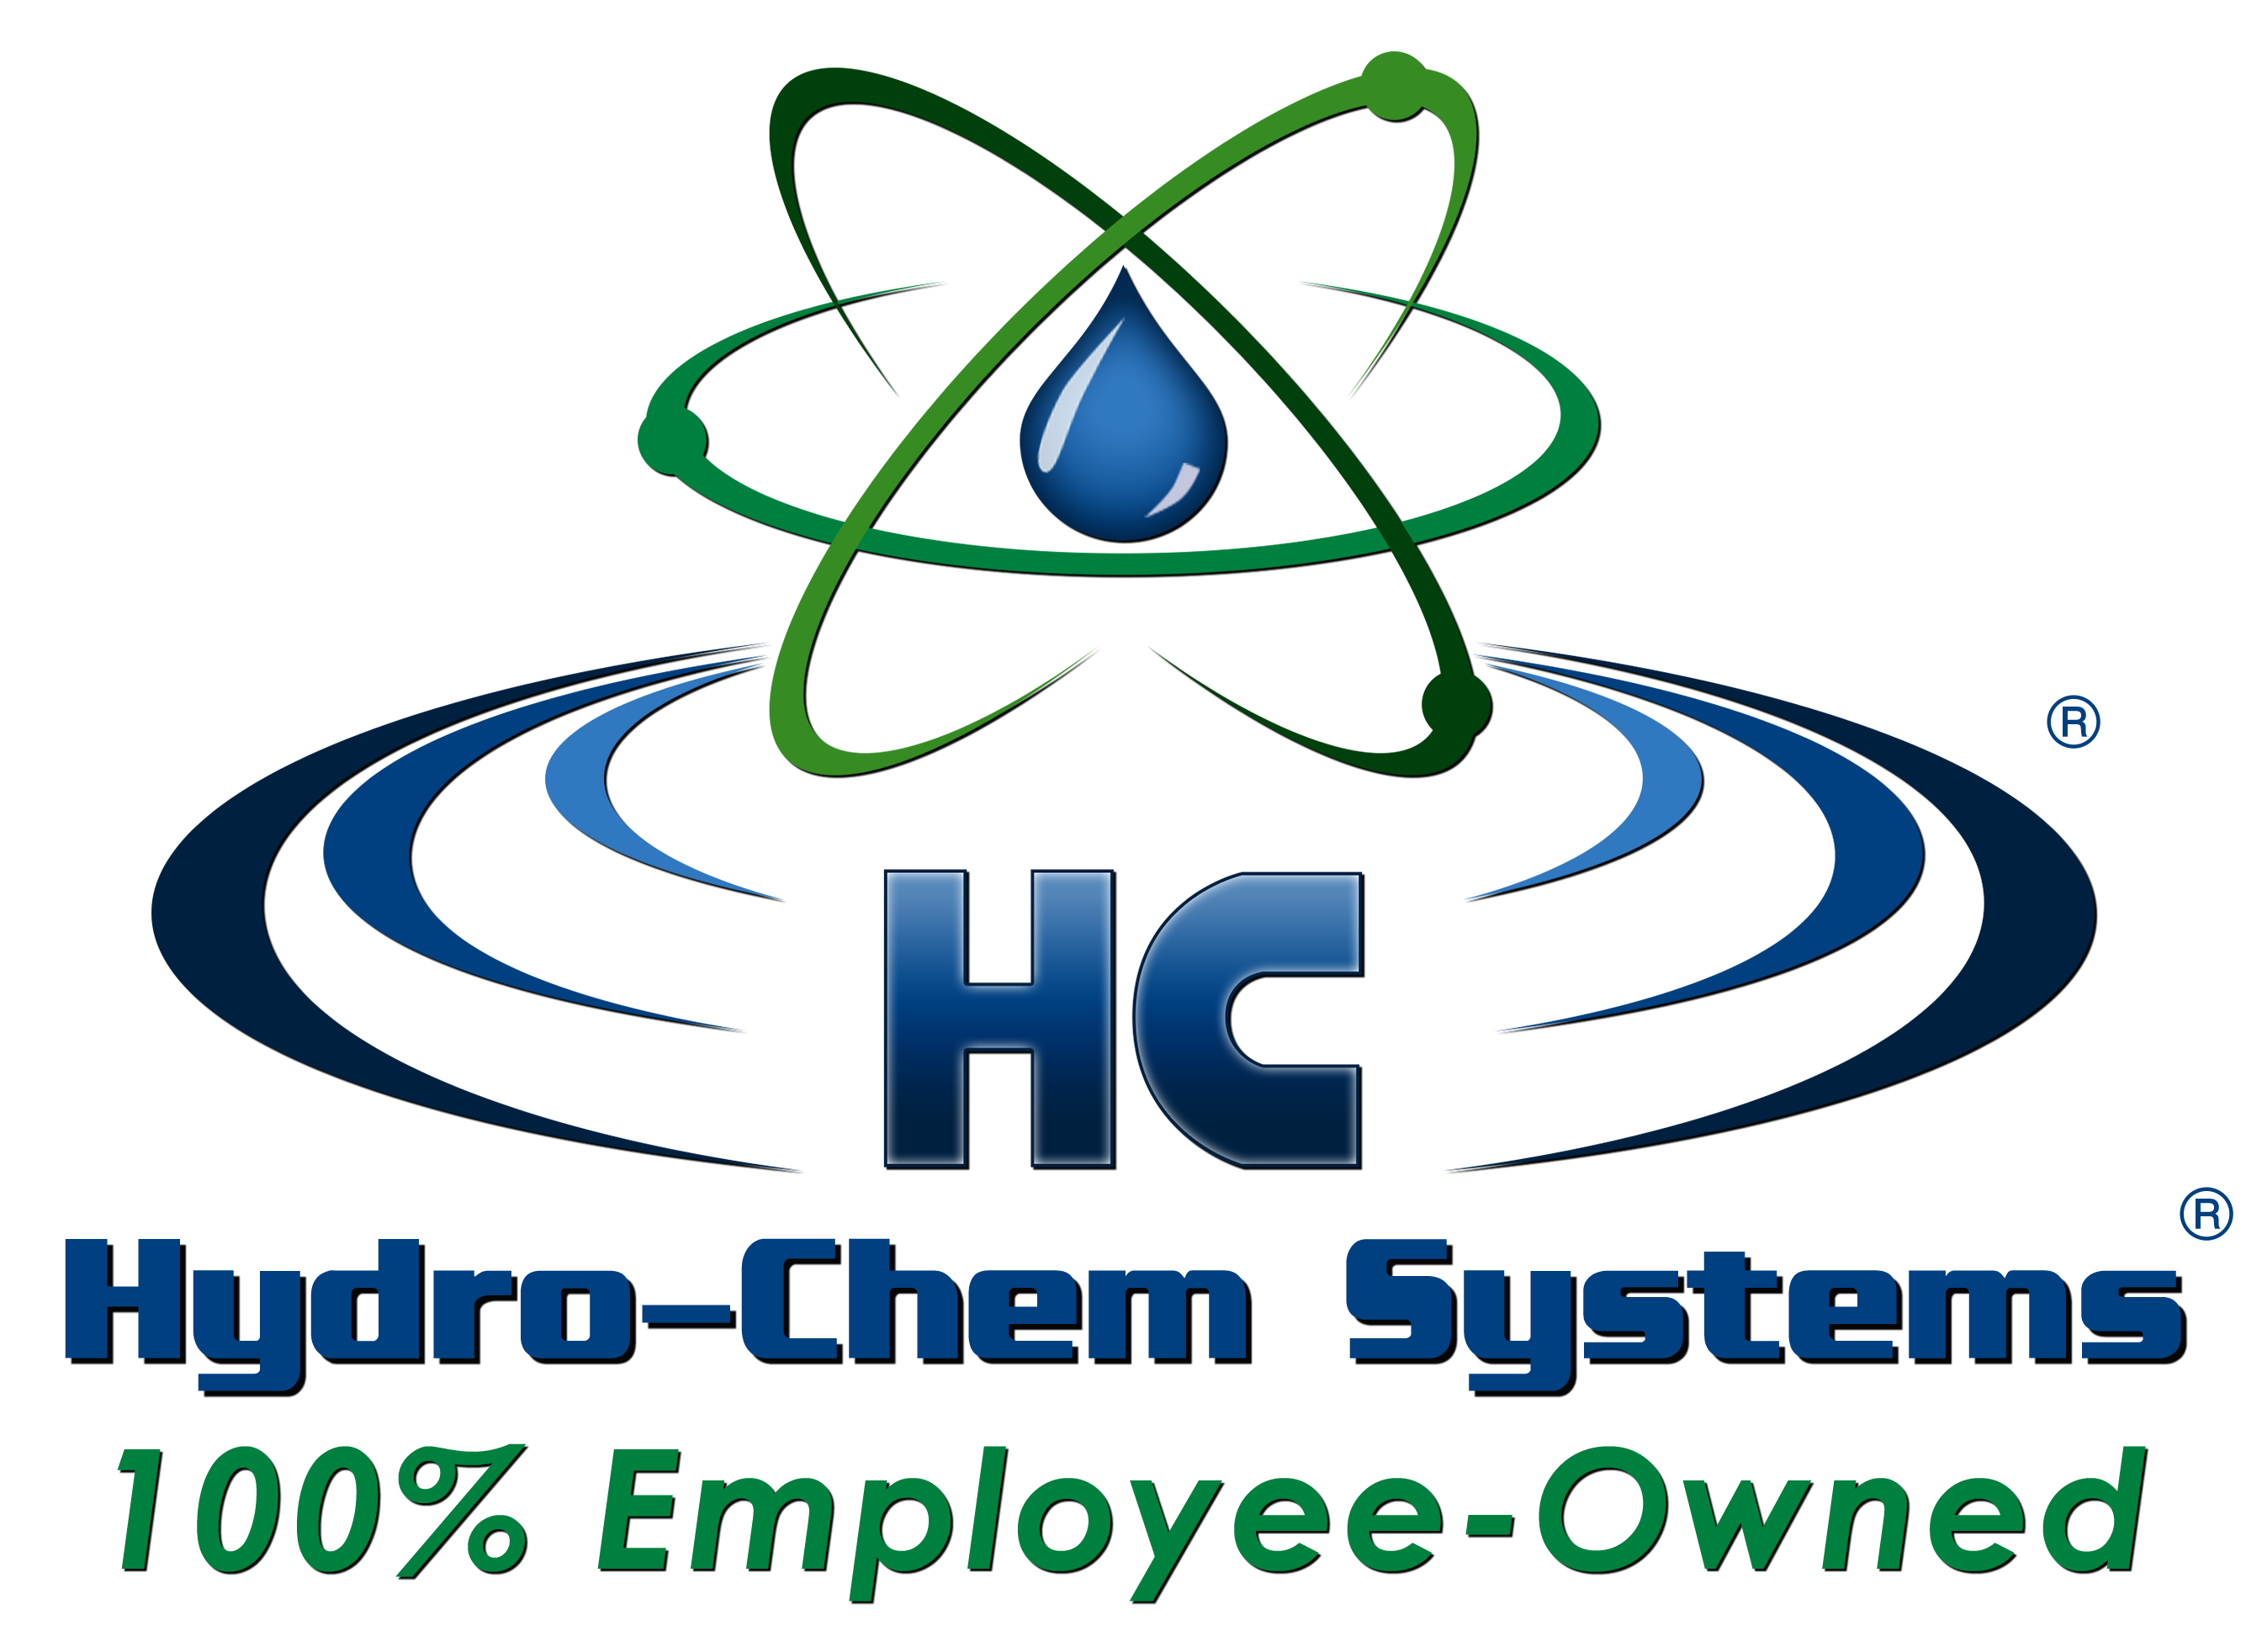 Hydro-Chem Systems